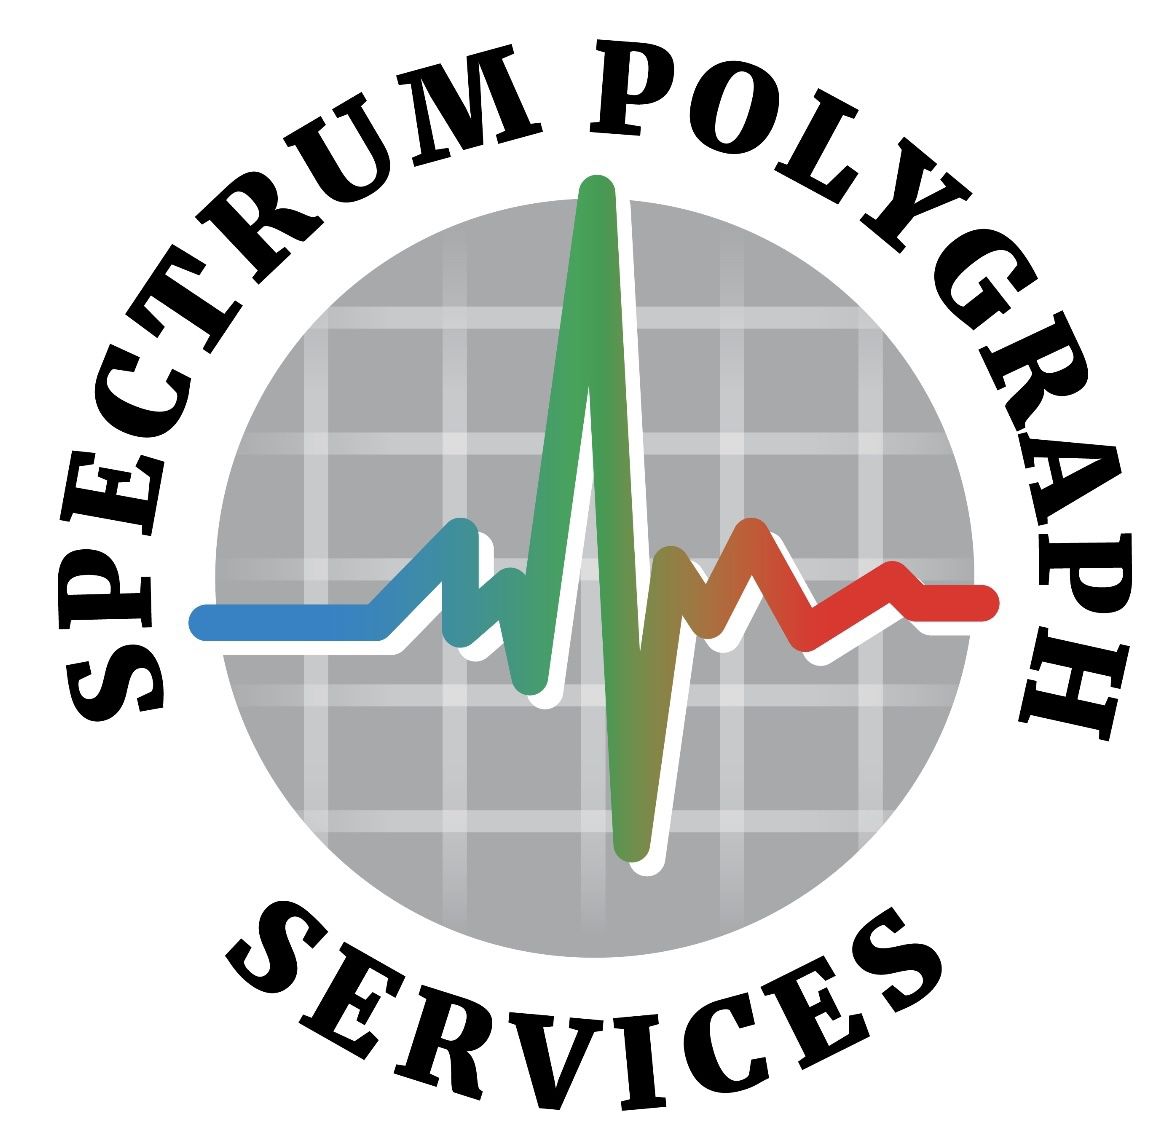 Spectrum Polygraph Services (Lie Detector Test)